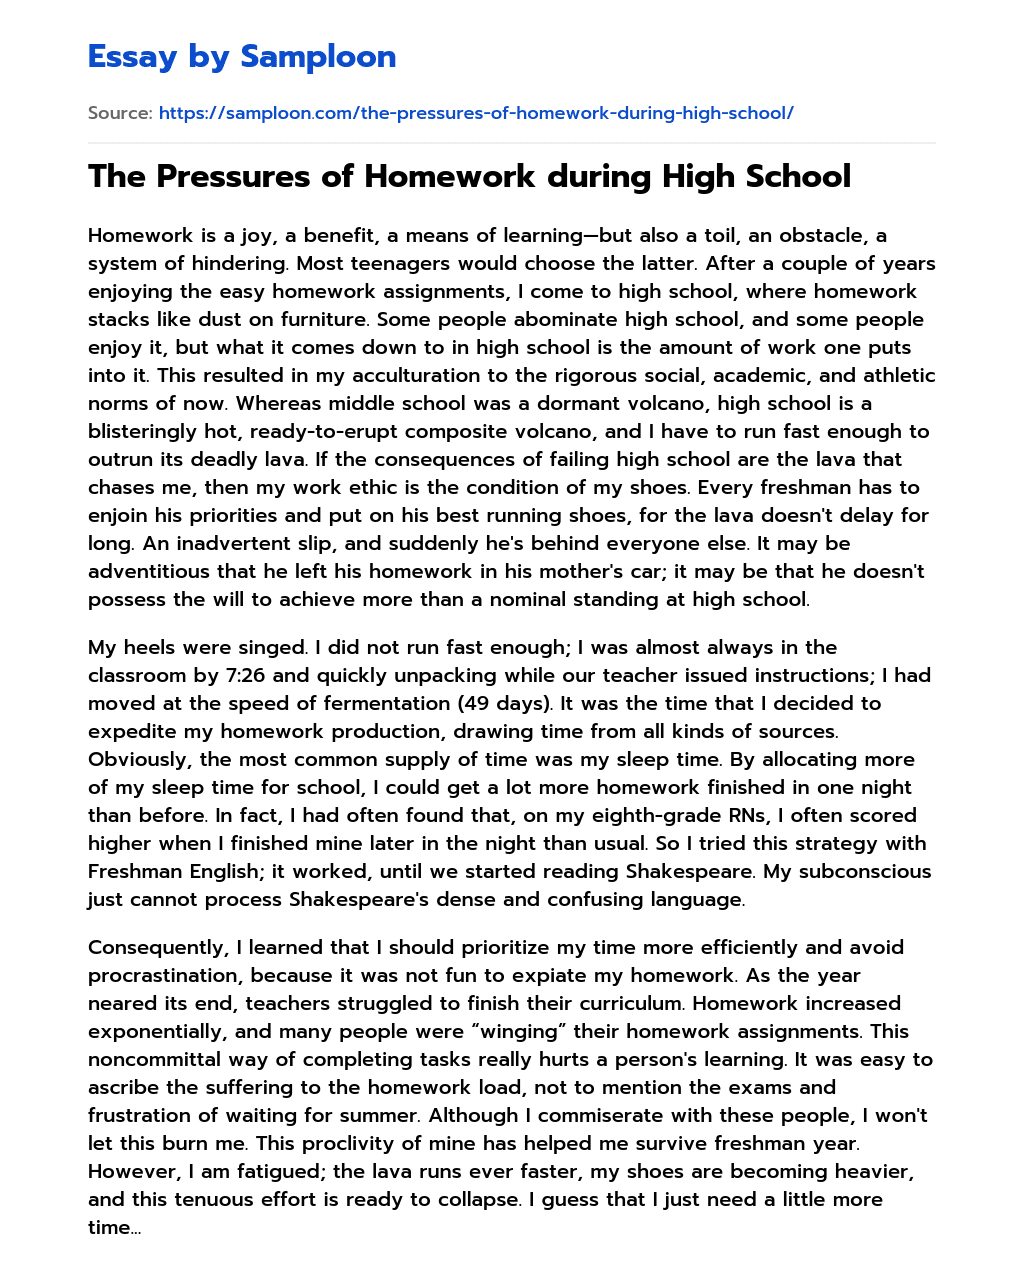 The Pressures of Homework during High School essay